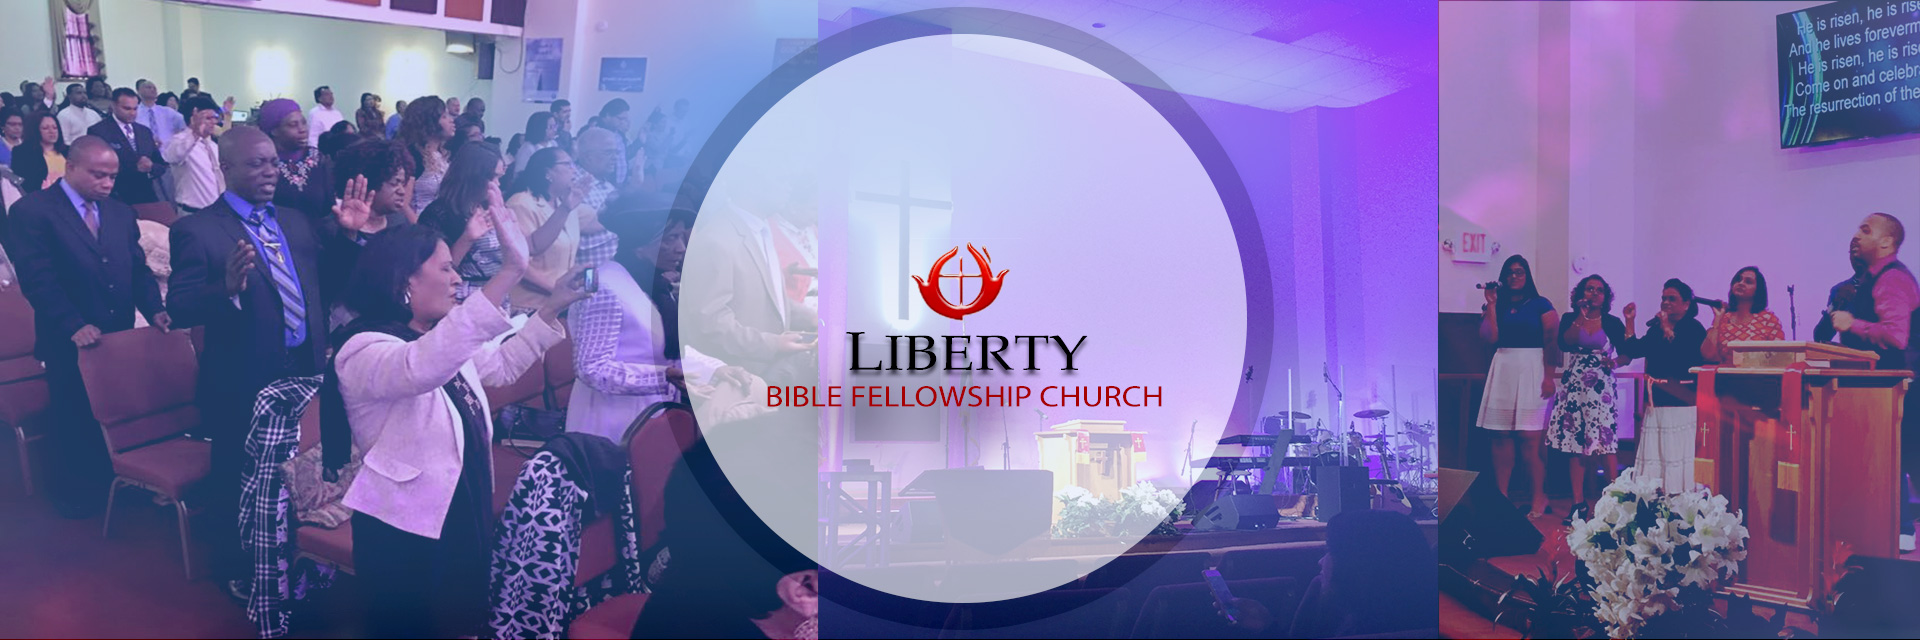 Liberty Bible Fellowship Church